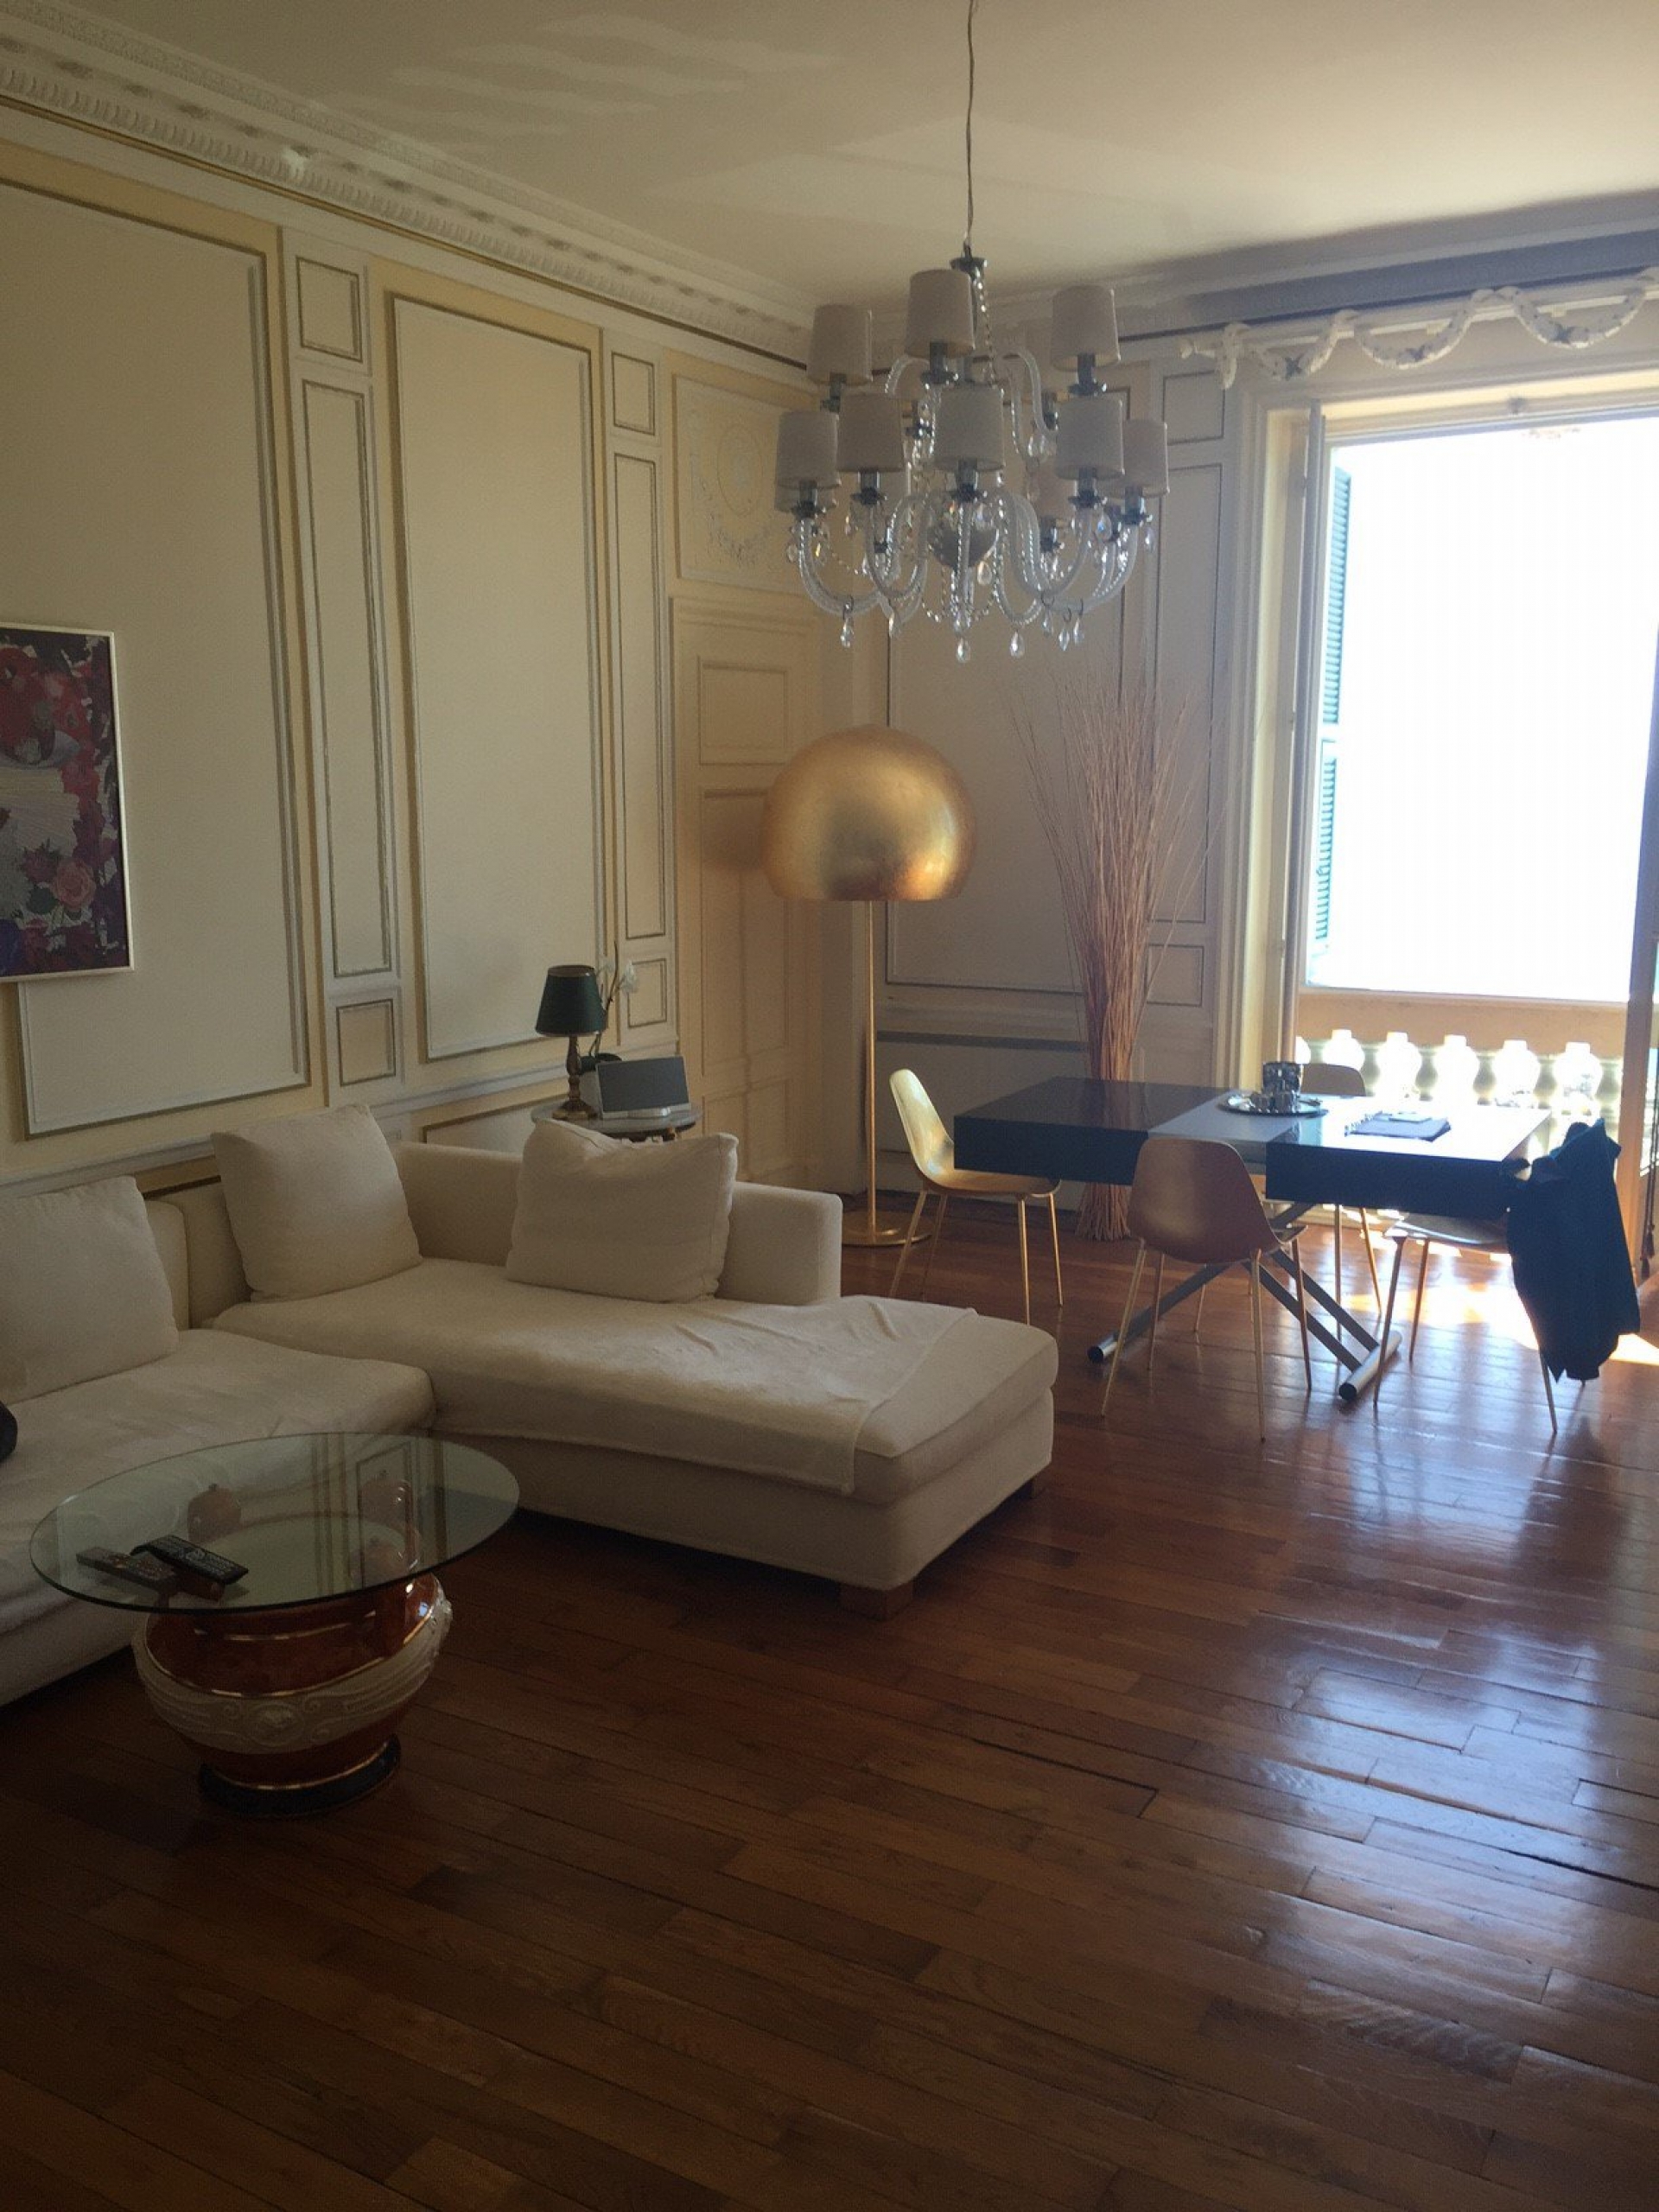 Dotta Appartement de 3 pieces a vendre - RIVIERA PALACE - Beausoleil - Beausoleil - img1